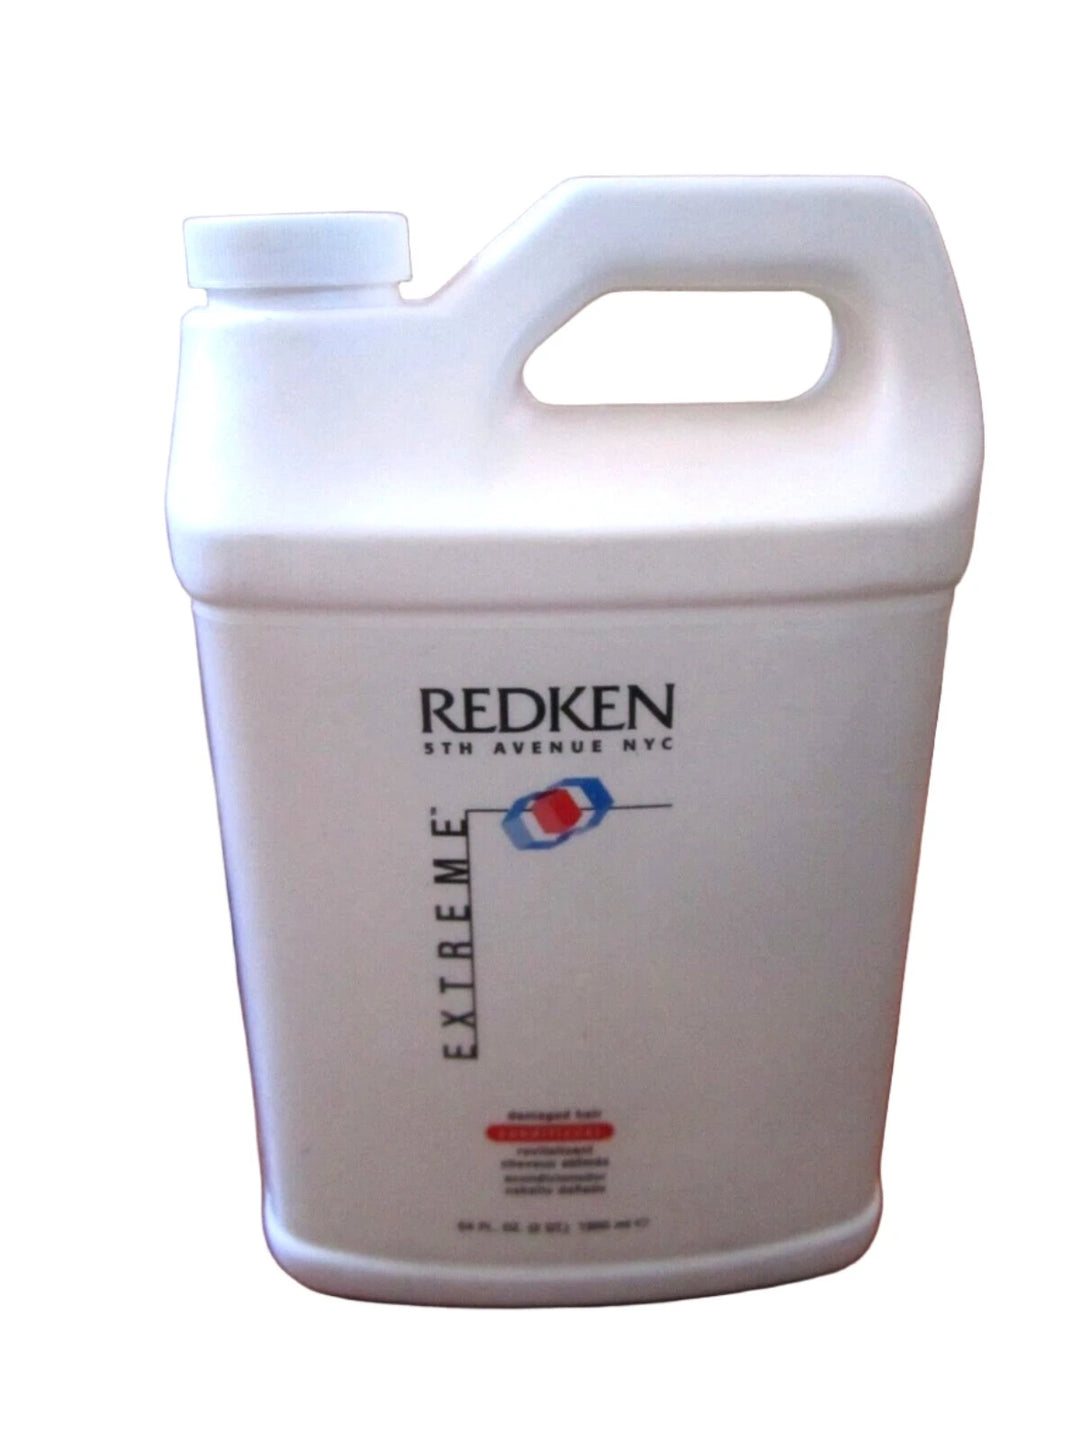 Redken Extreme Conditioner 64 oz one gallon